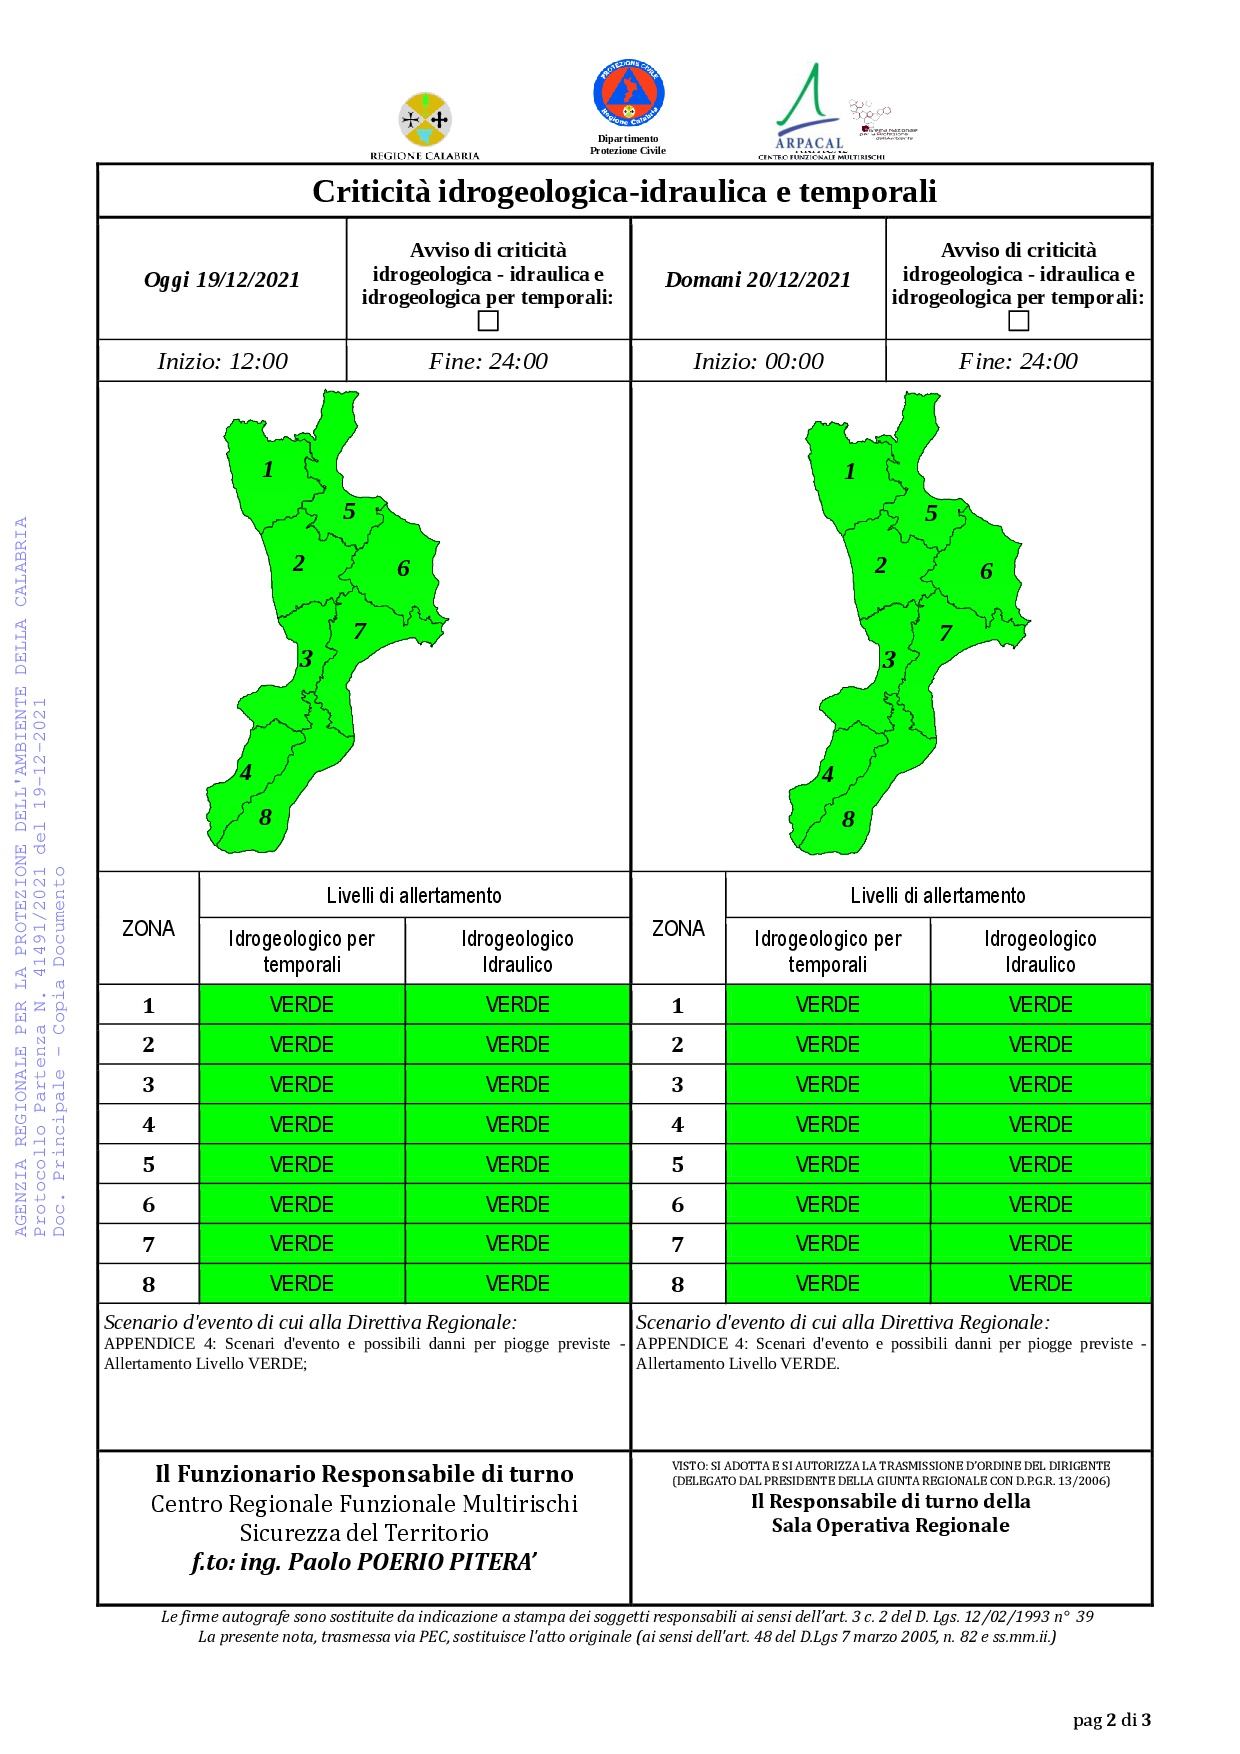 Criticità idrogeologica-idraulica e temporali in Calabria 20-12-2021